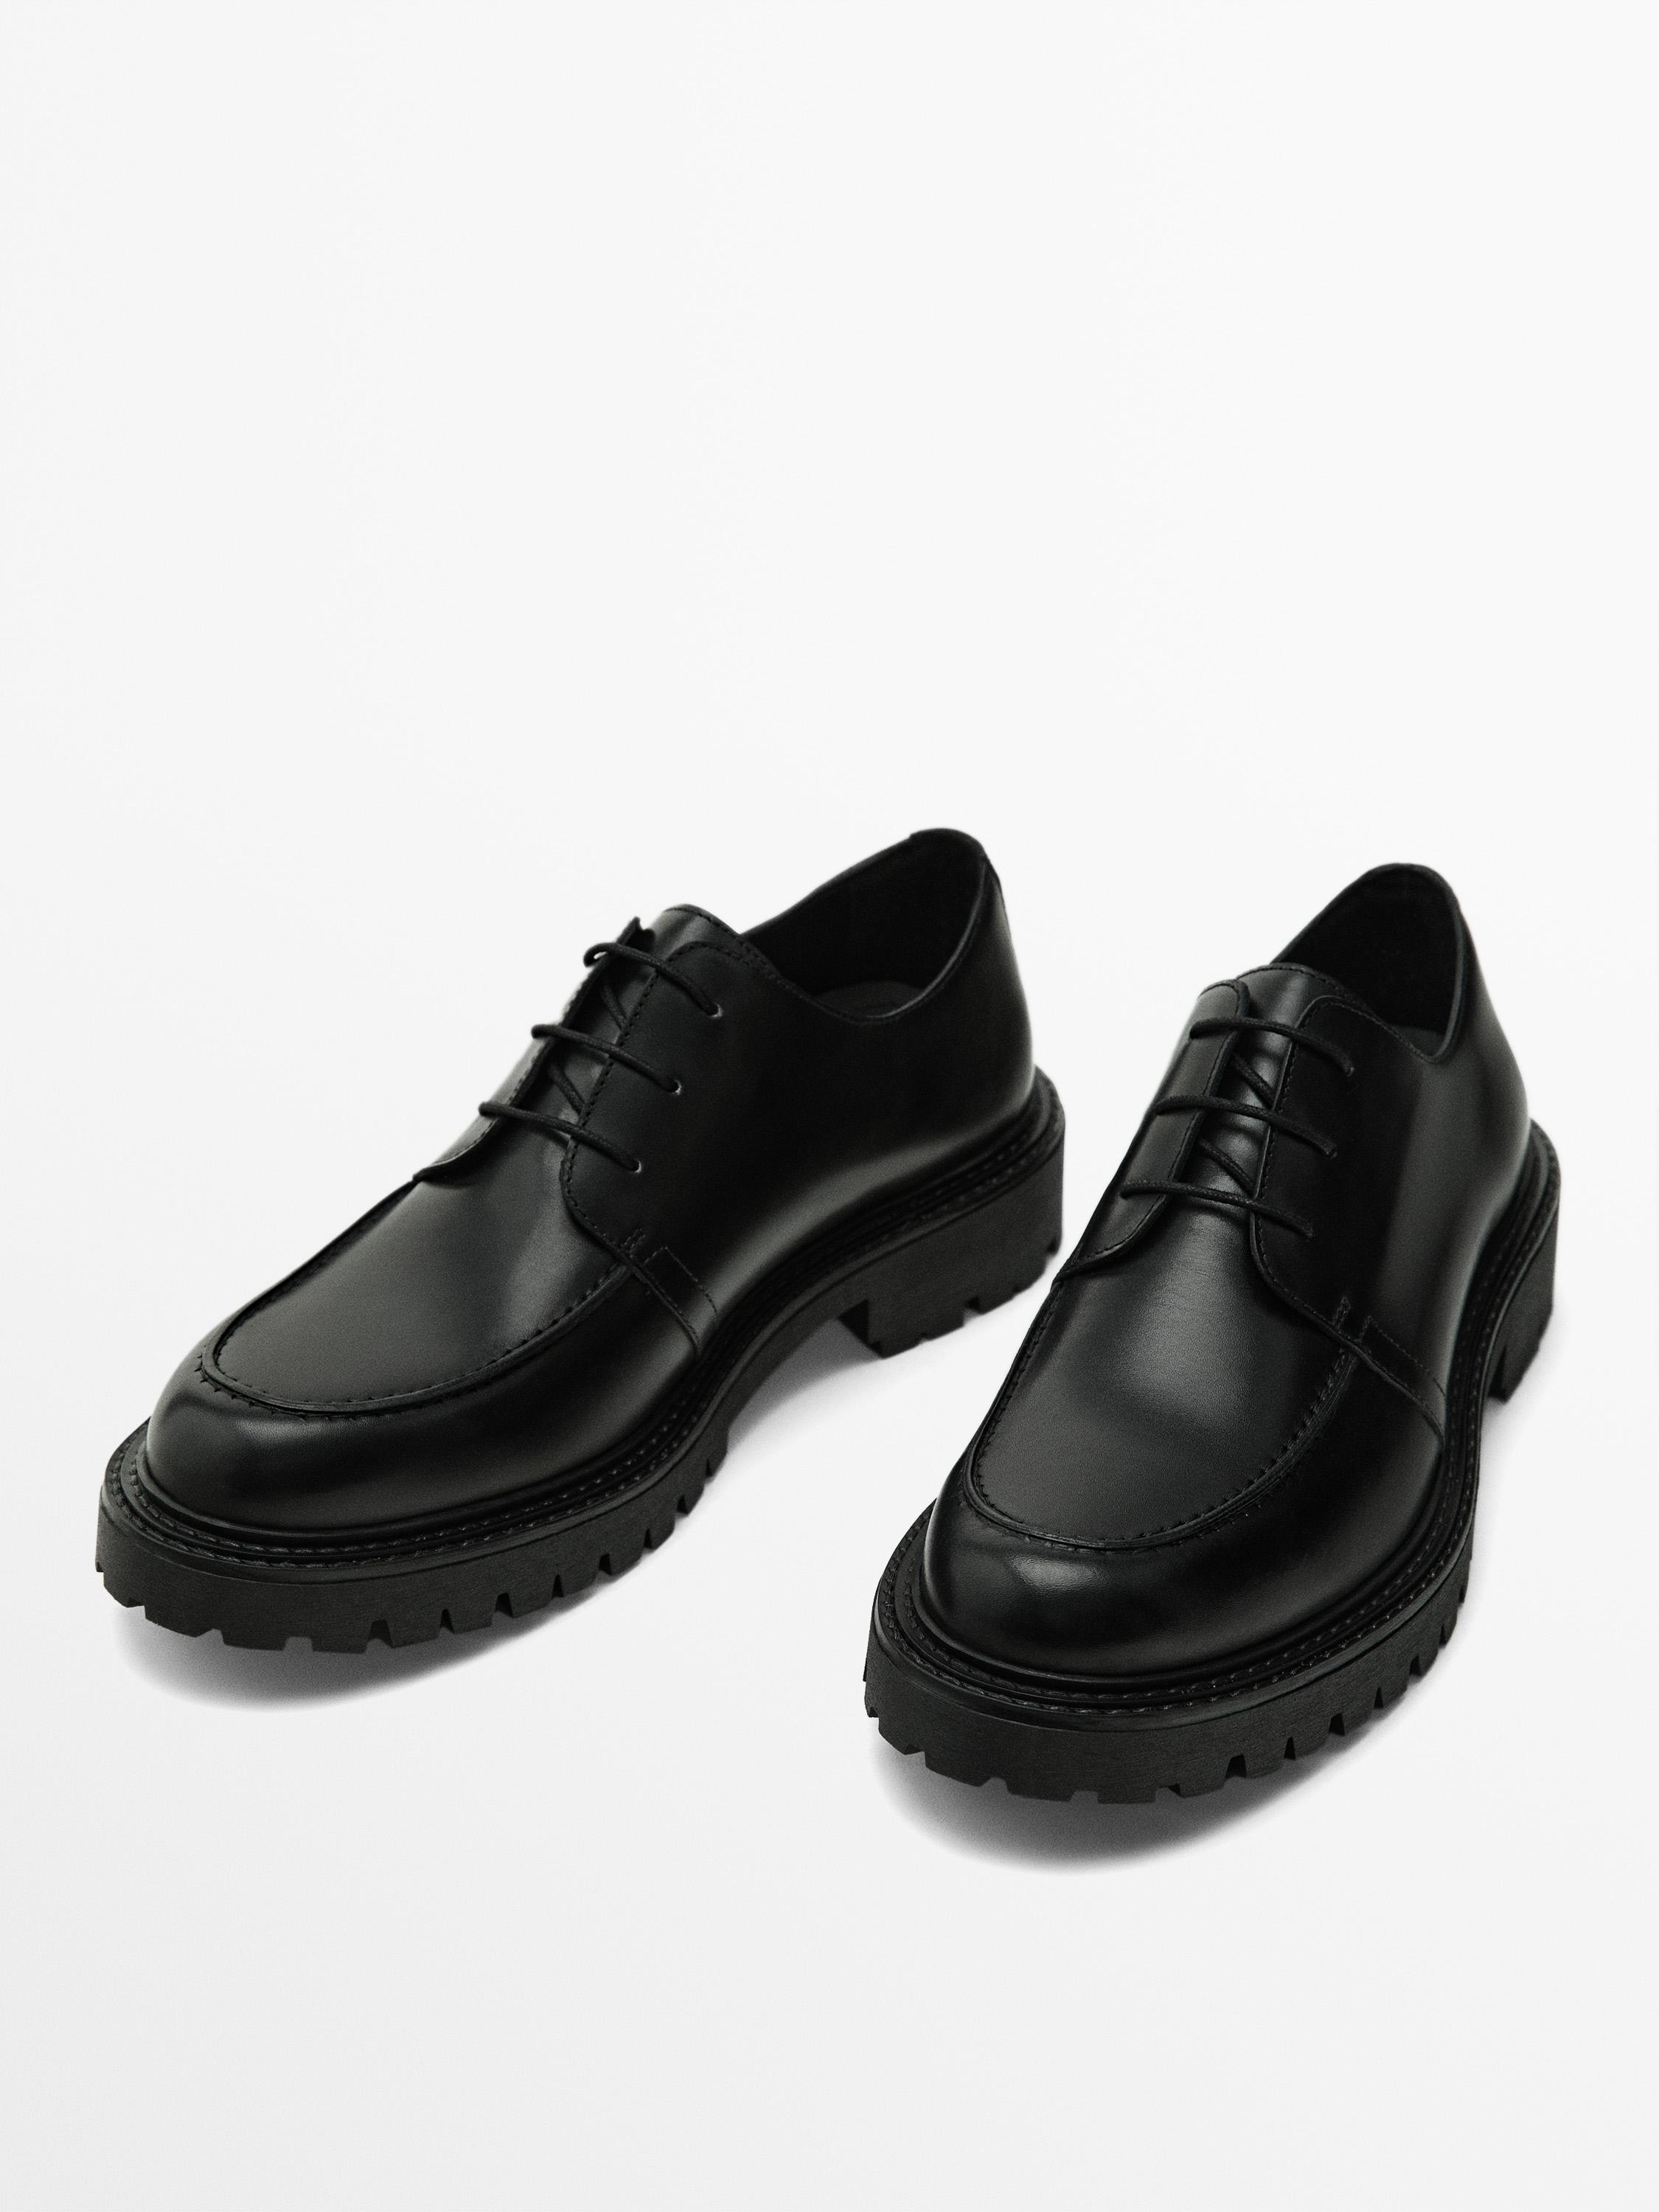 Black moc toe shoes